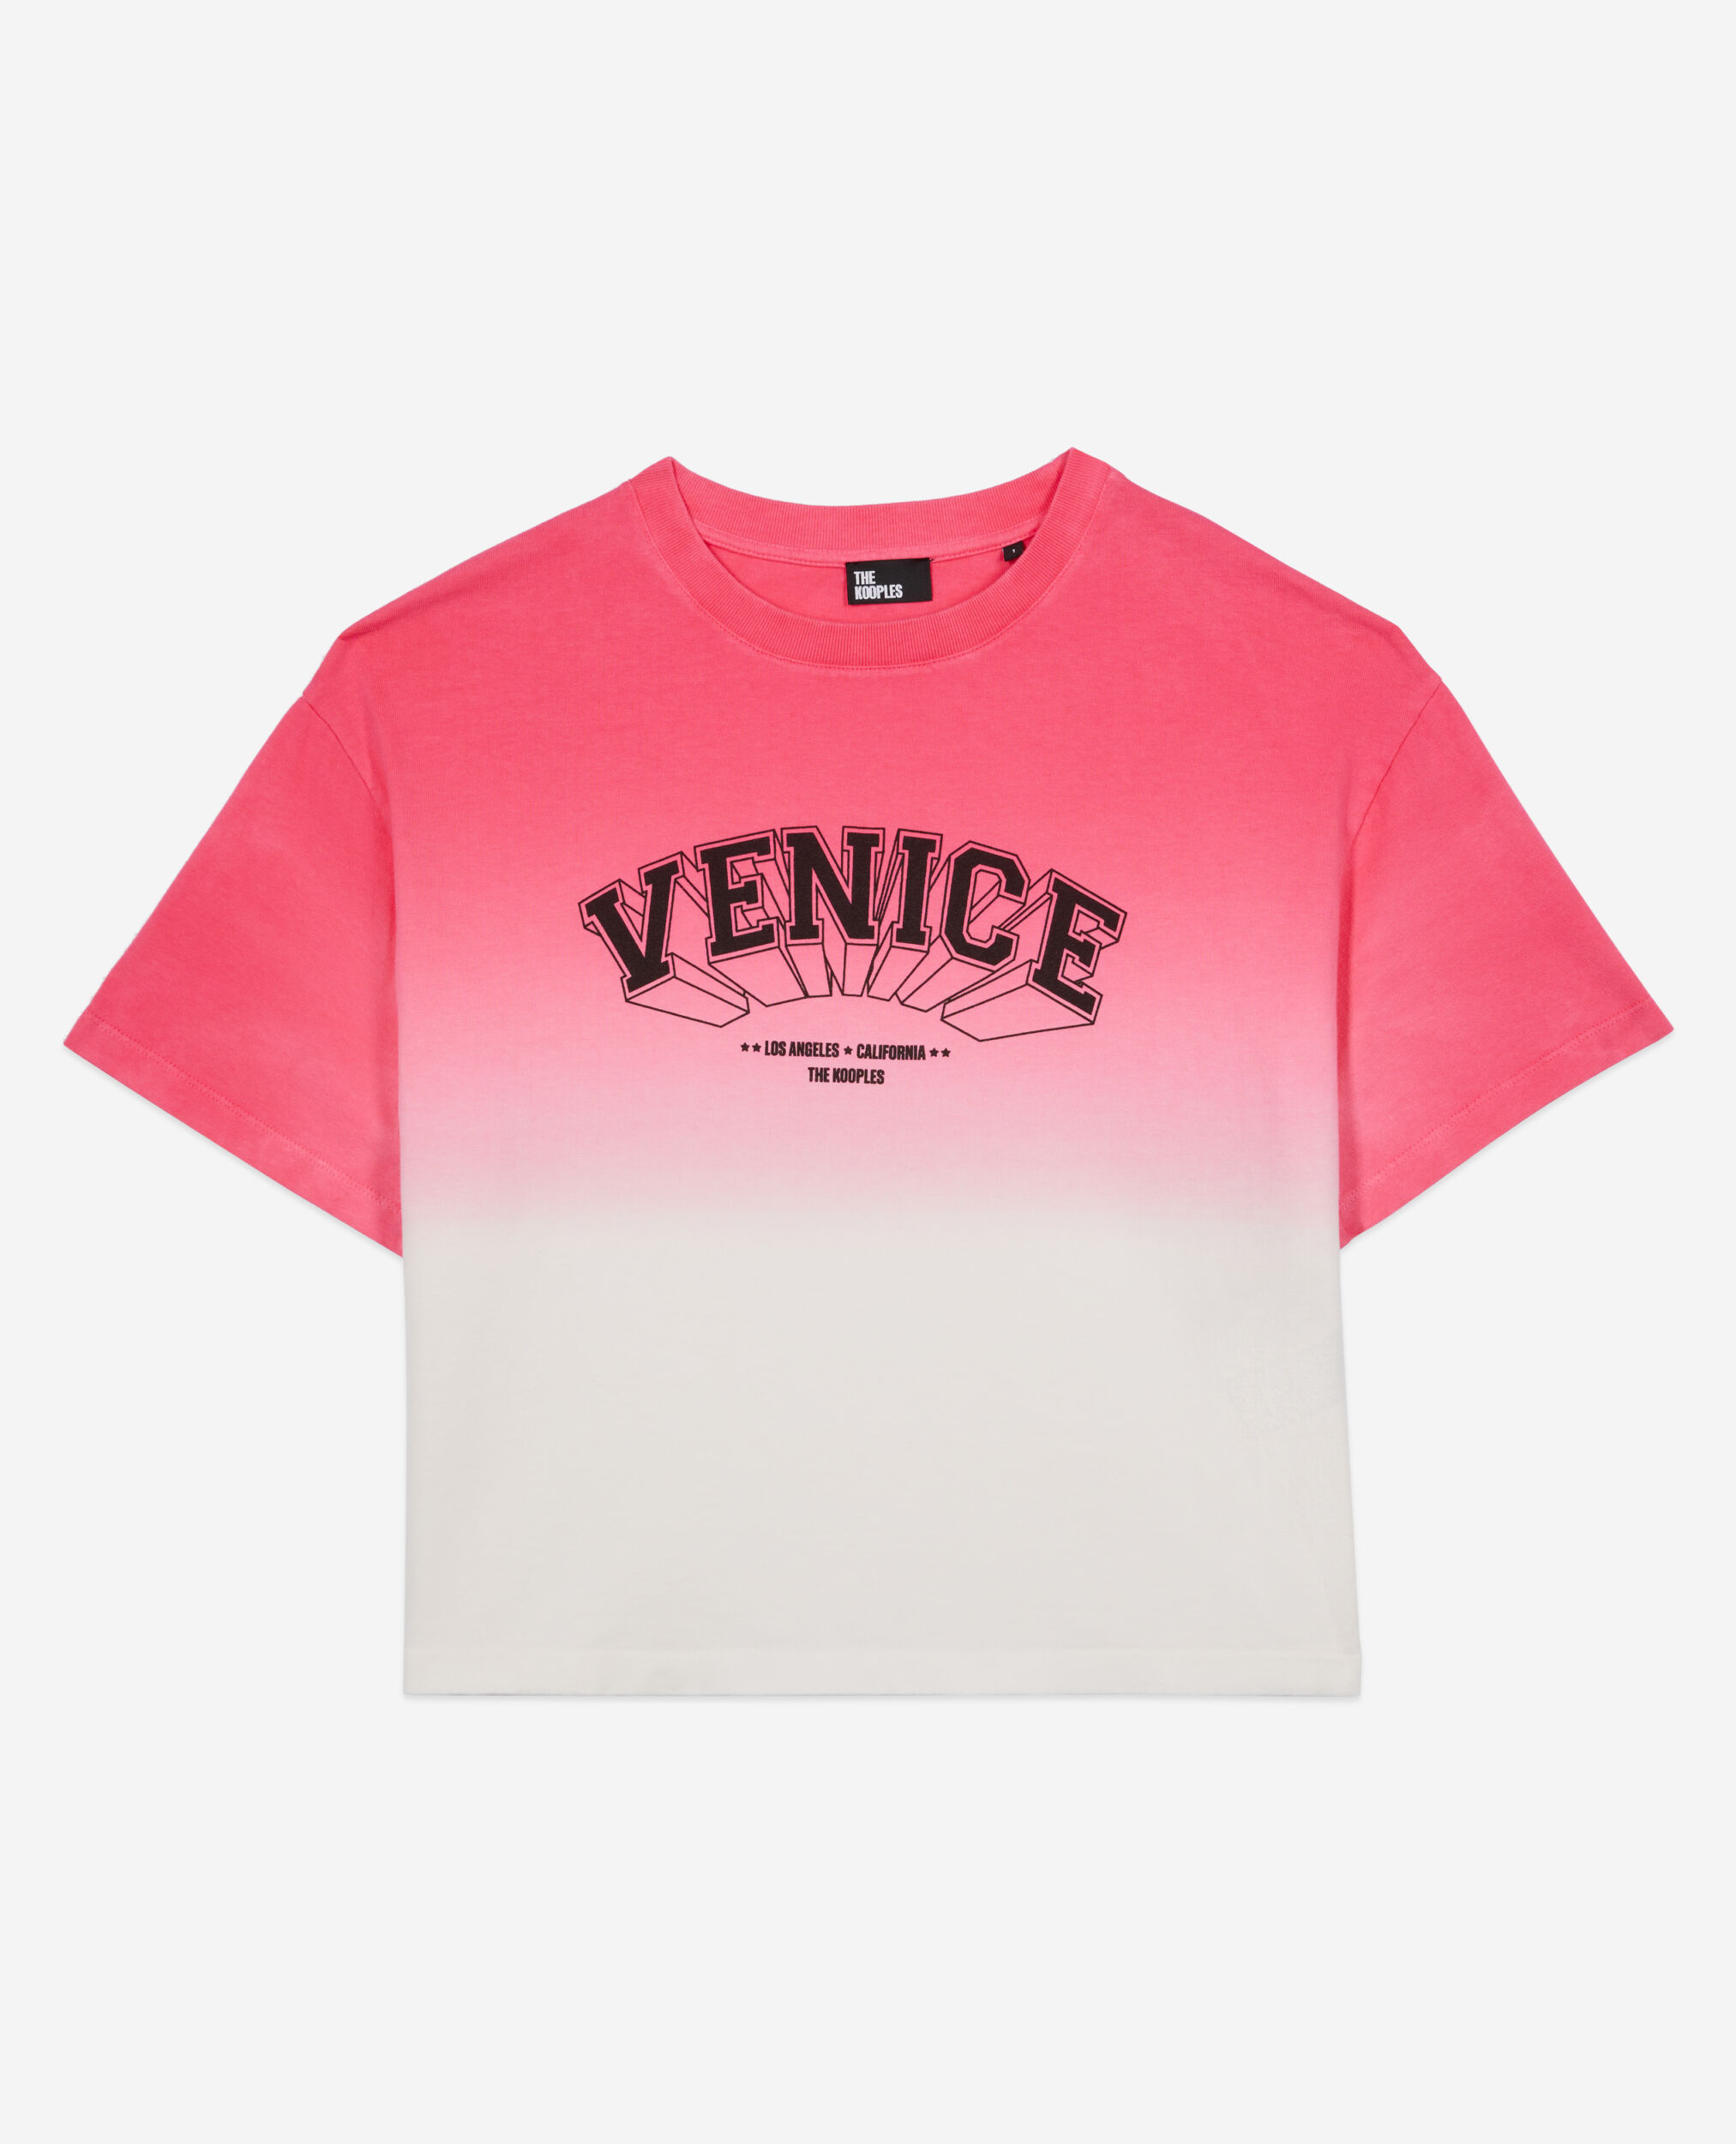 T-shirt rose dégradé avec sérigraphie Venice, RETRO PINK, hi-res image number null